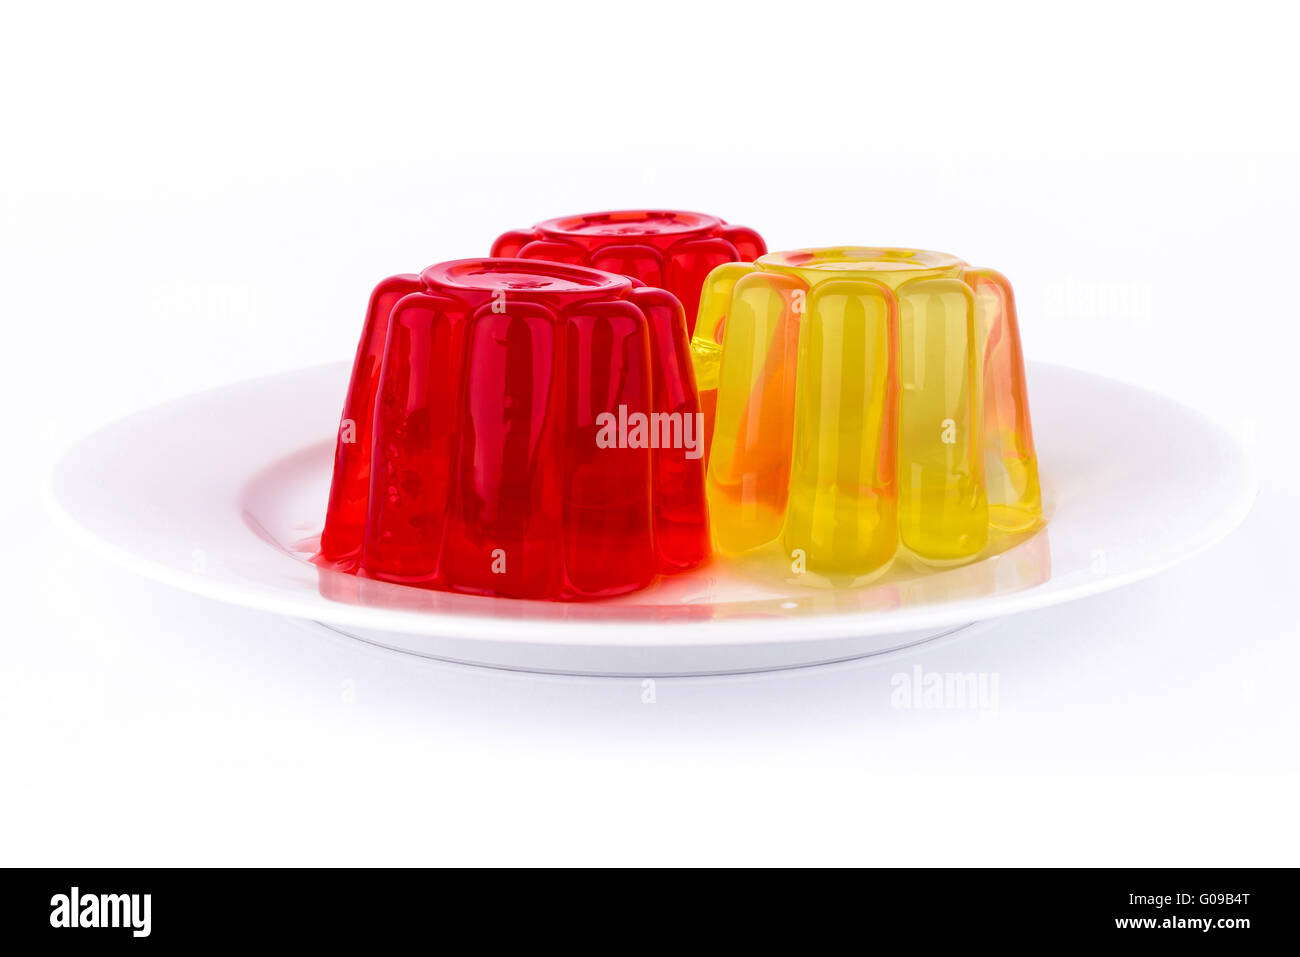 Ballistic gelatin hi-res stock photography and images - Alamy